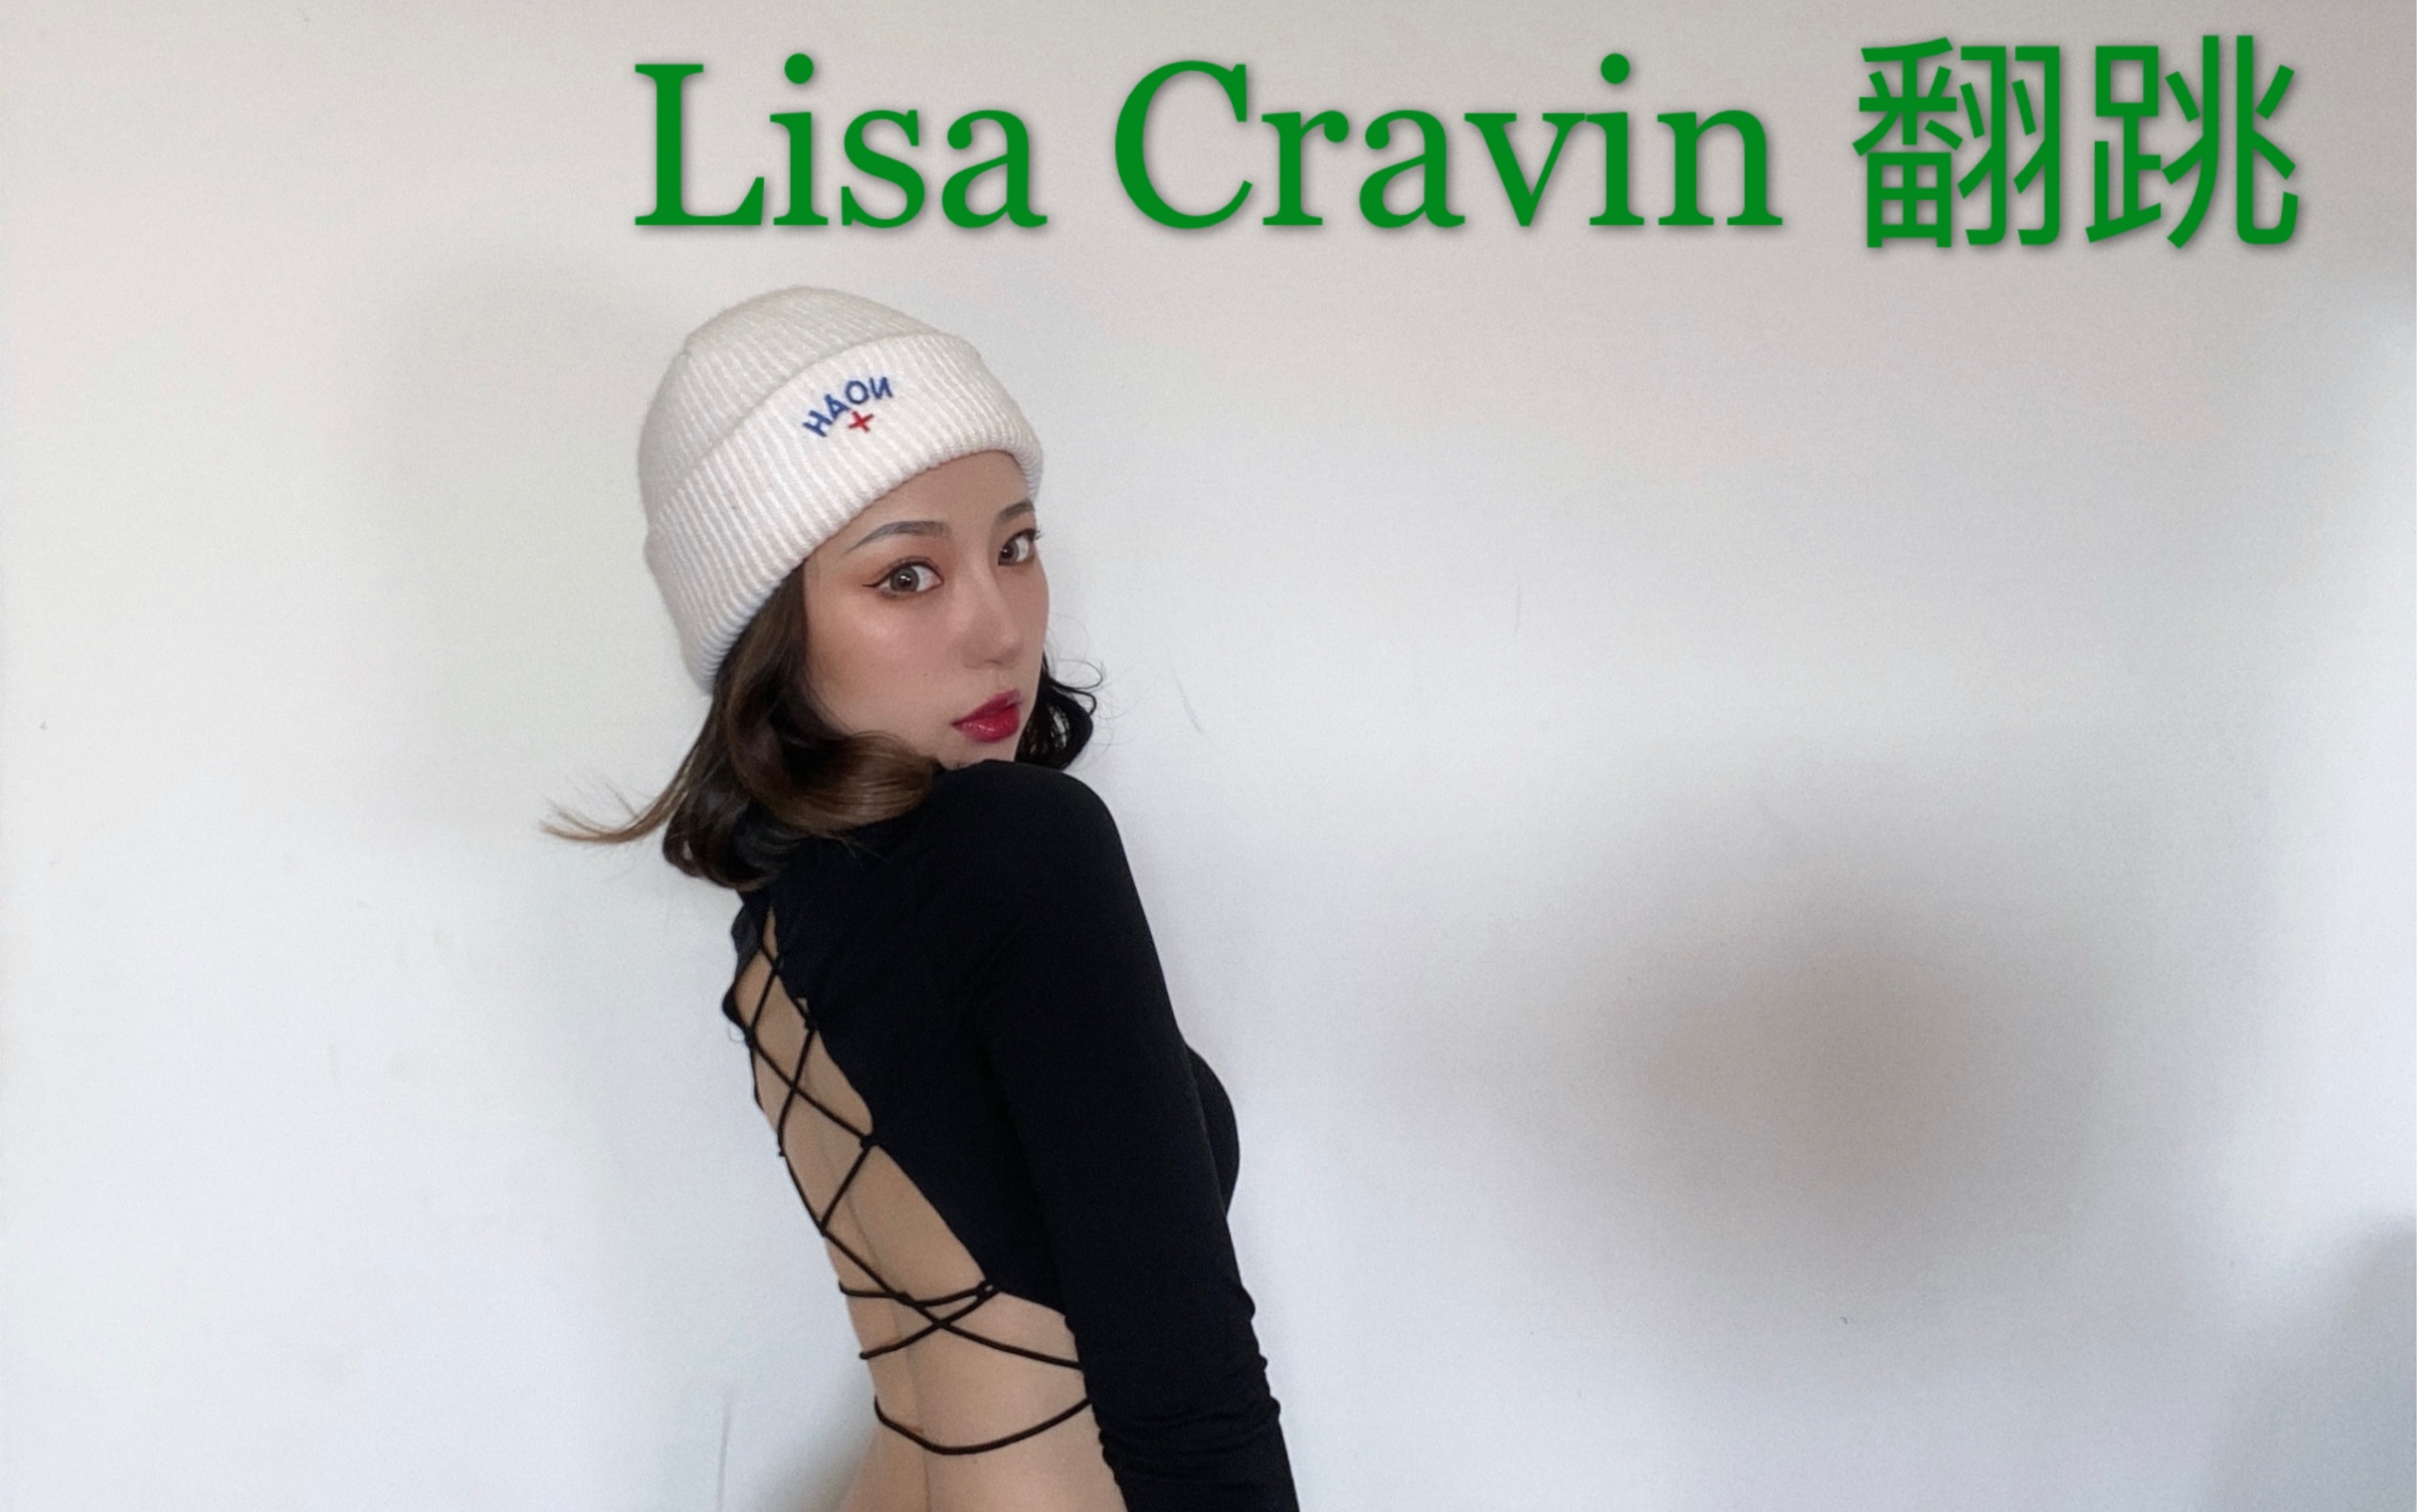 【Lisa Cravin 】【Kikiboom】高度还原编舞 四舍五入也是BlackPink中国区域成员加【表情管理】一镜到底拍摄 加手机拍摄表情管理练习～